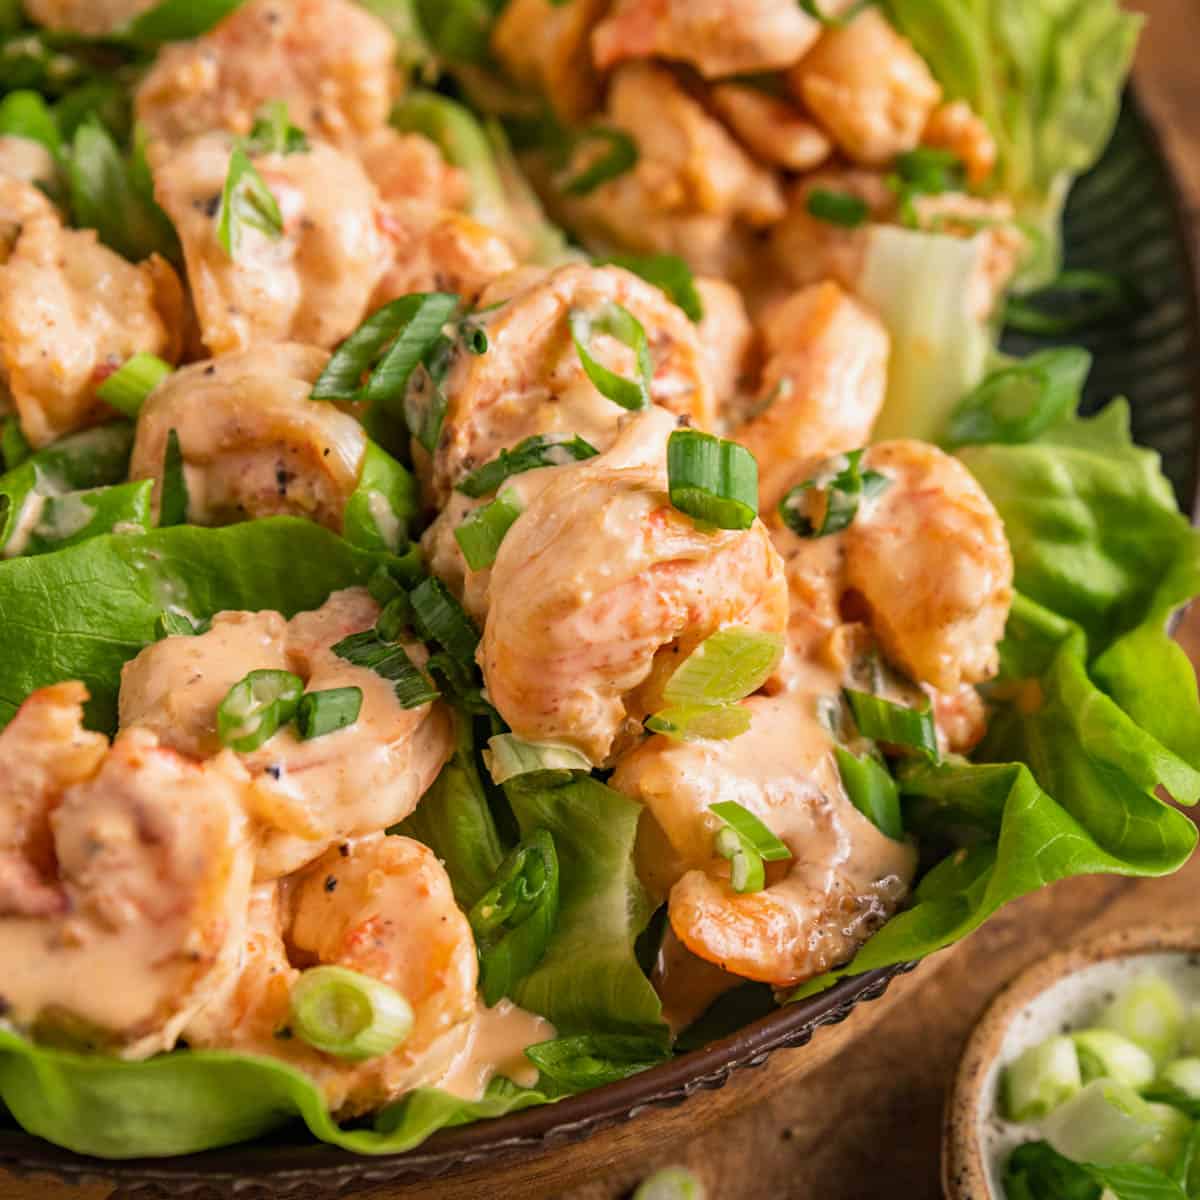 a close up showing bang bang sauce on shrimp lettuce wraps.